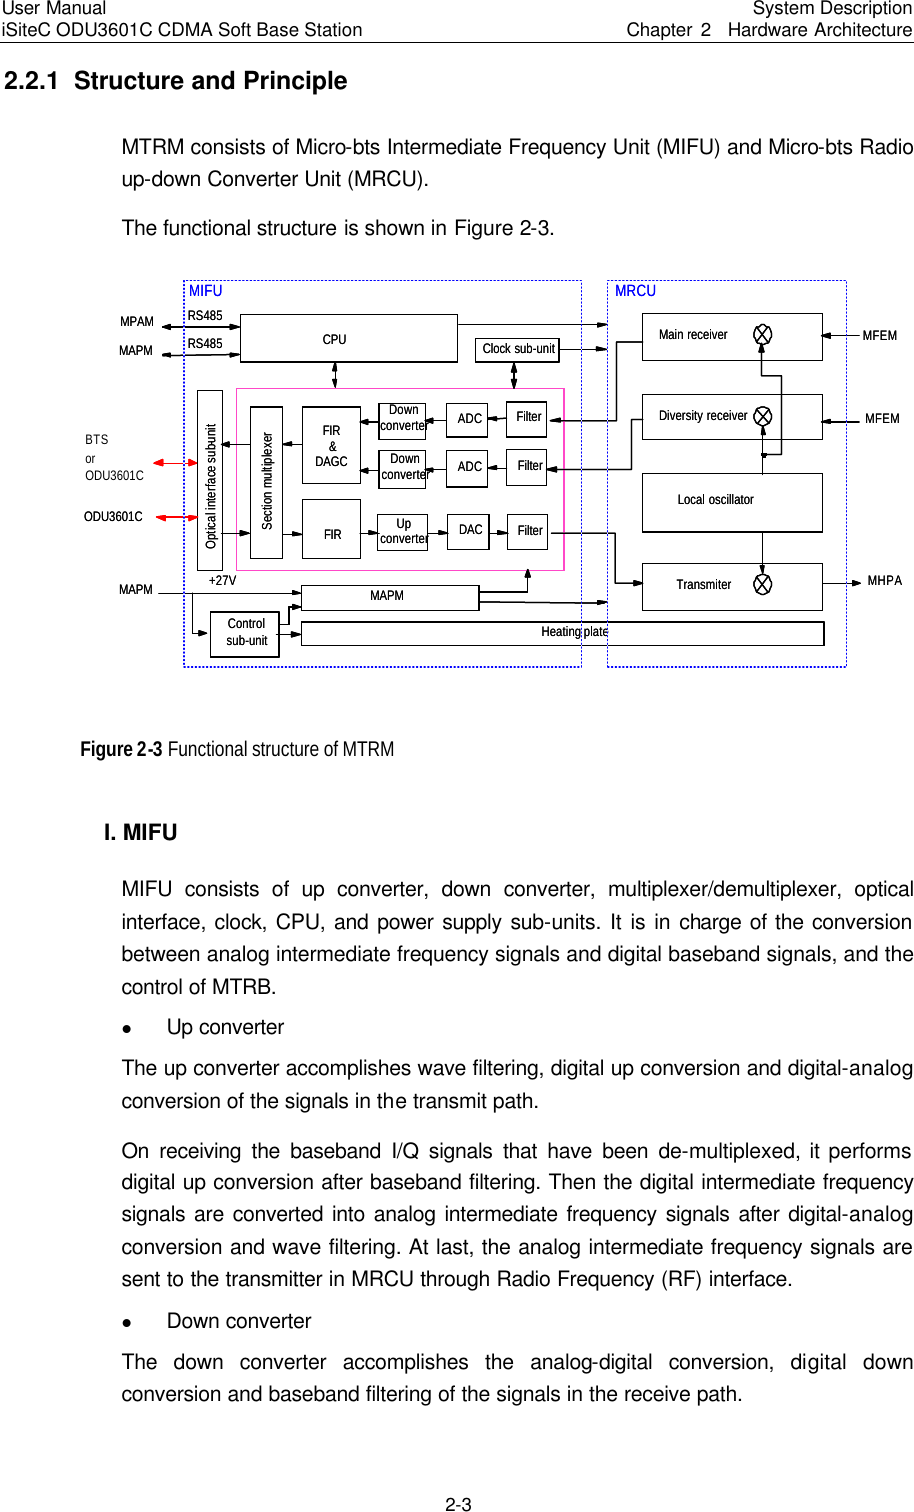 Page 19 of Huawei Technologies ODU3601C-800 CDMA Base Station User Manual 2